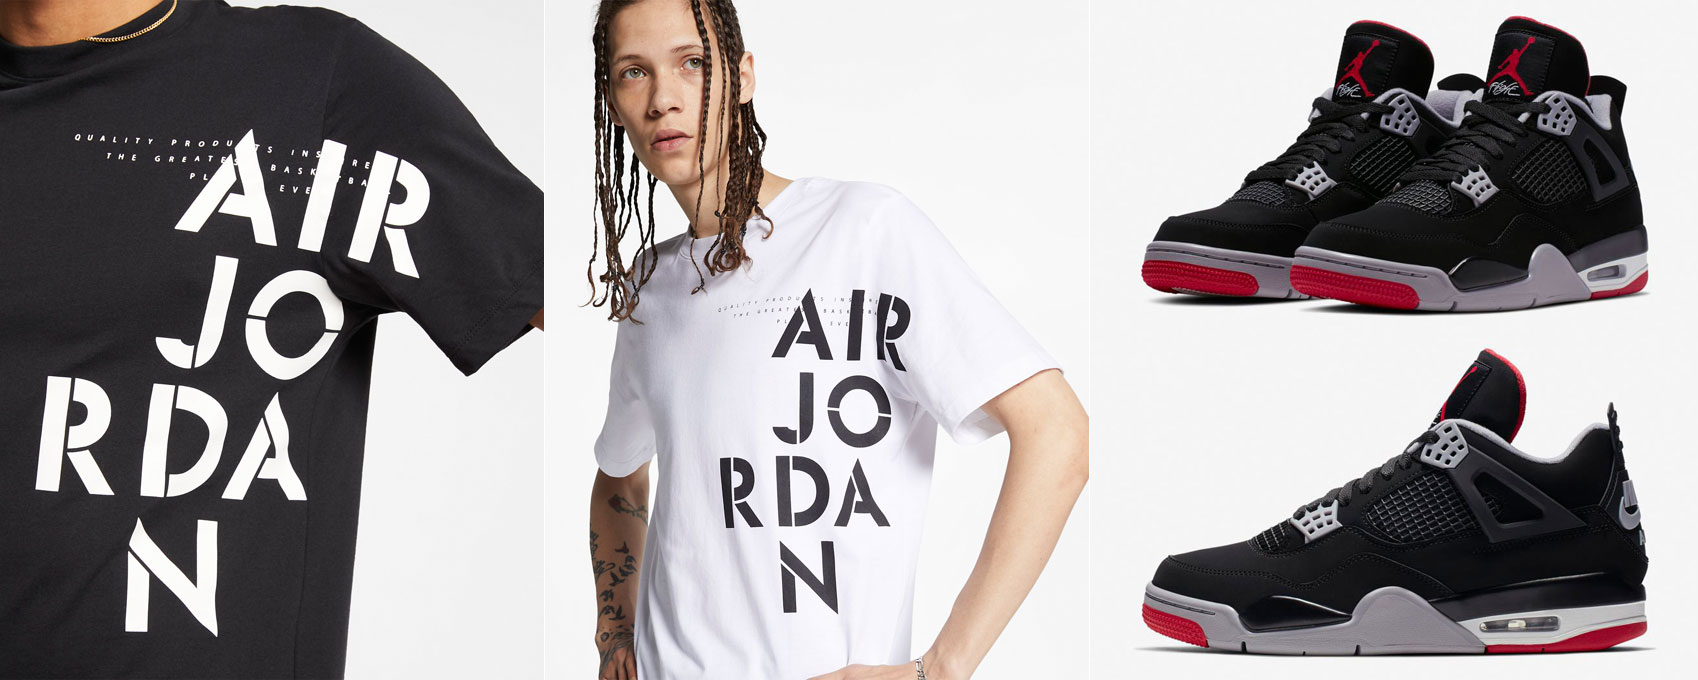 bred-air-jordan-4-nike-air-shirt